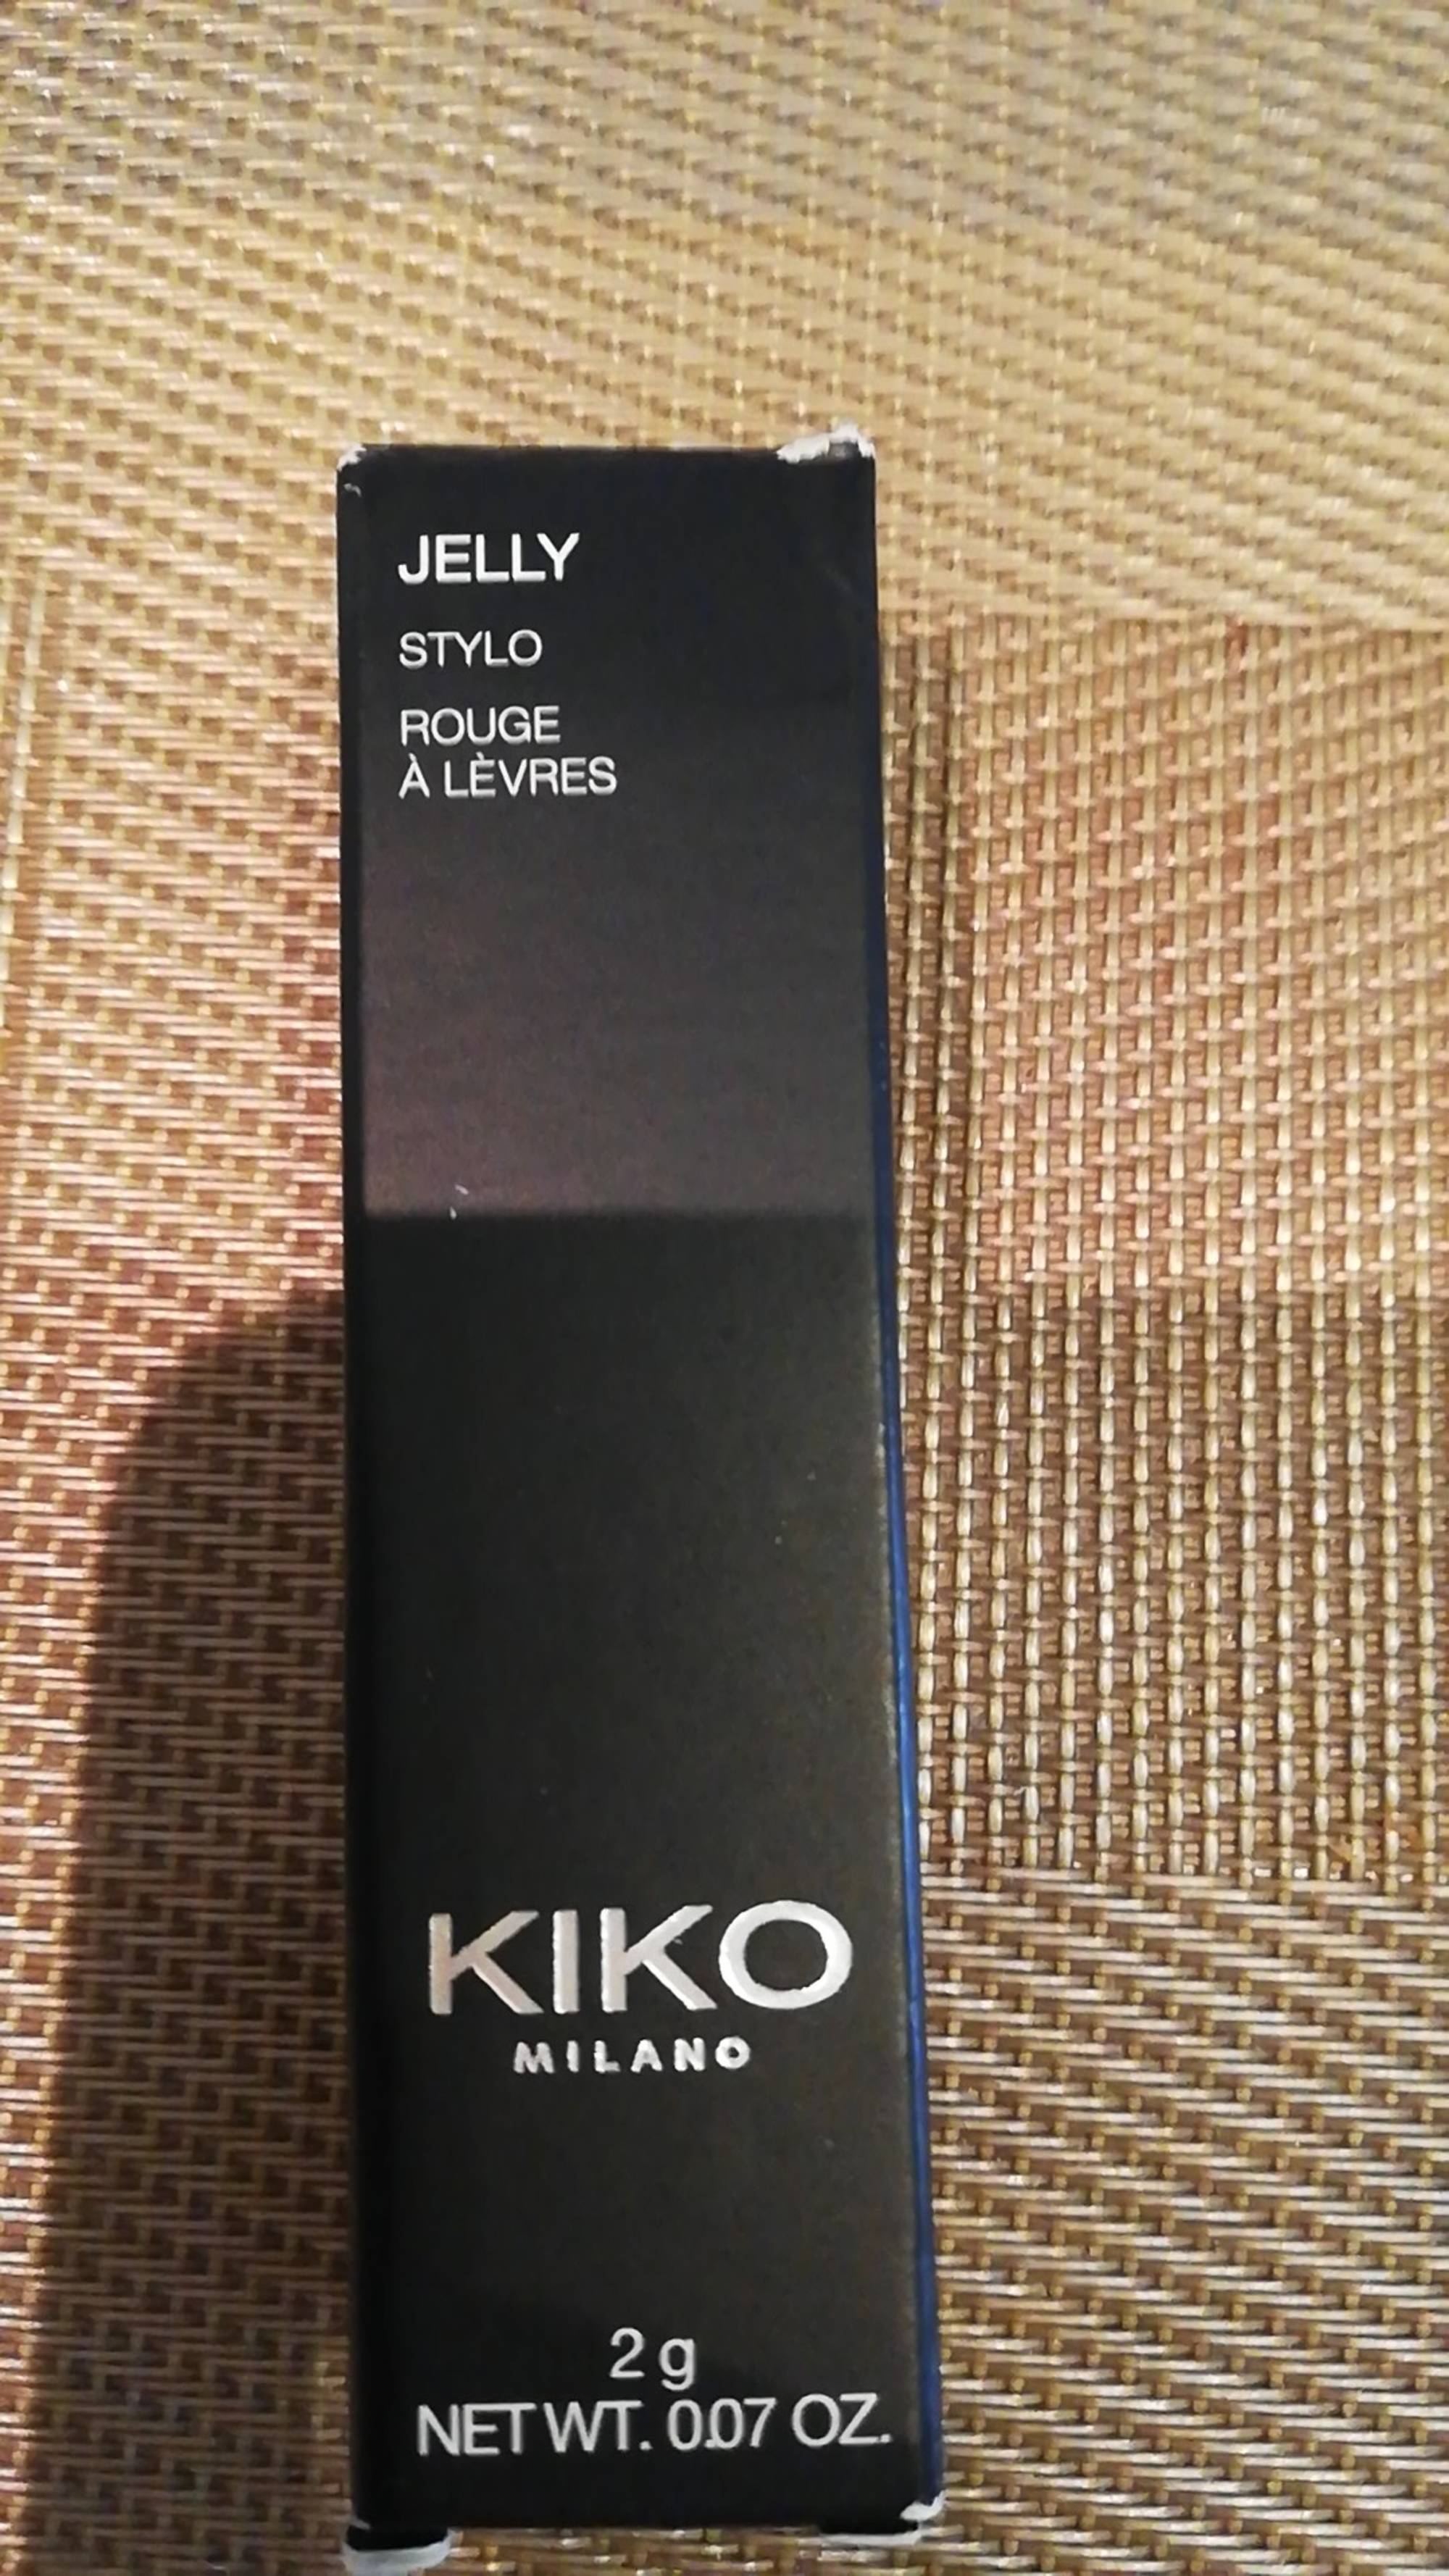 KIKO - Jelly stylo - Rouge à lèvres